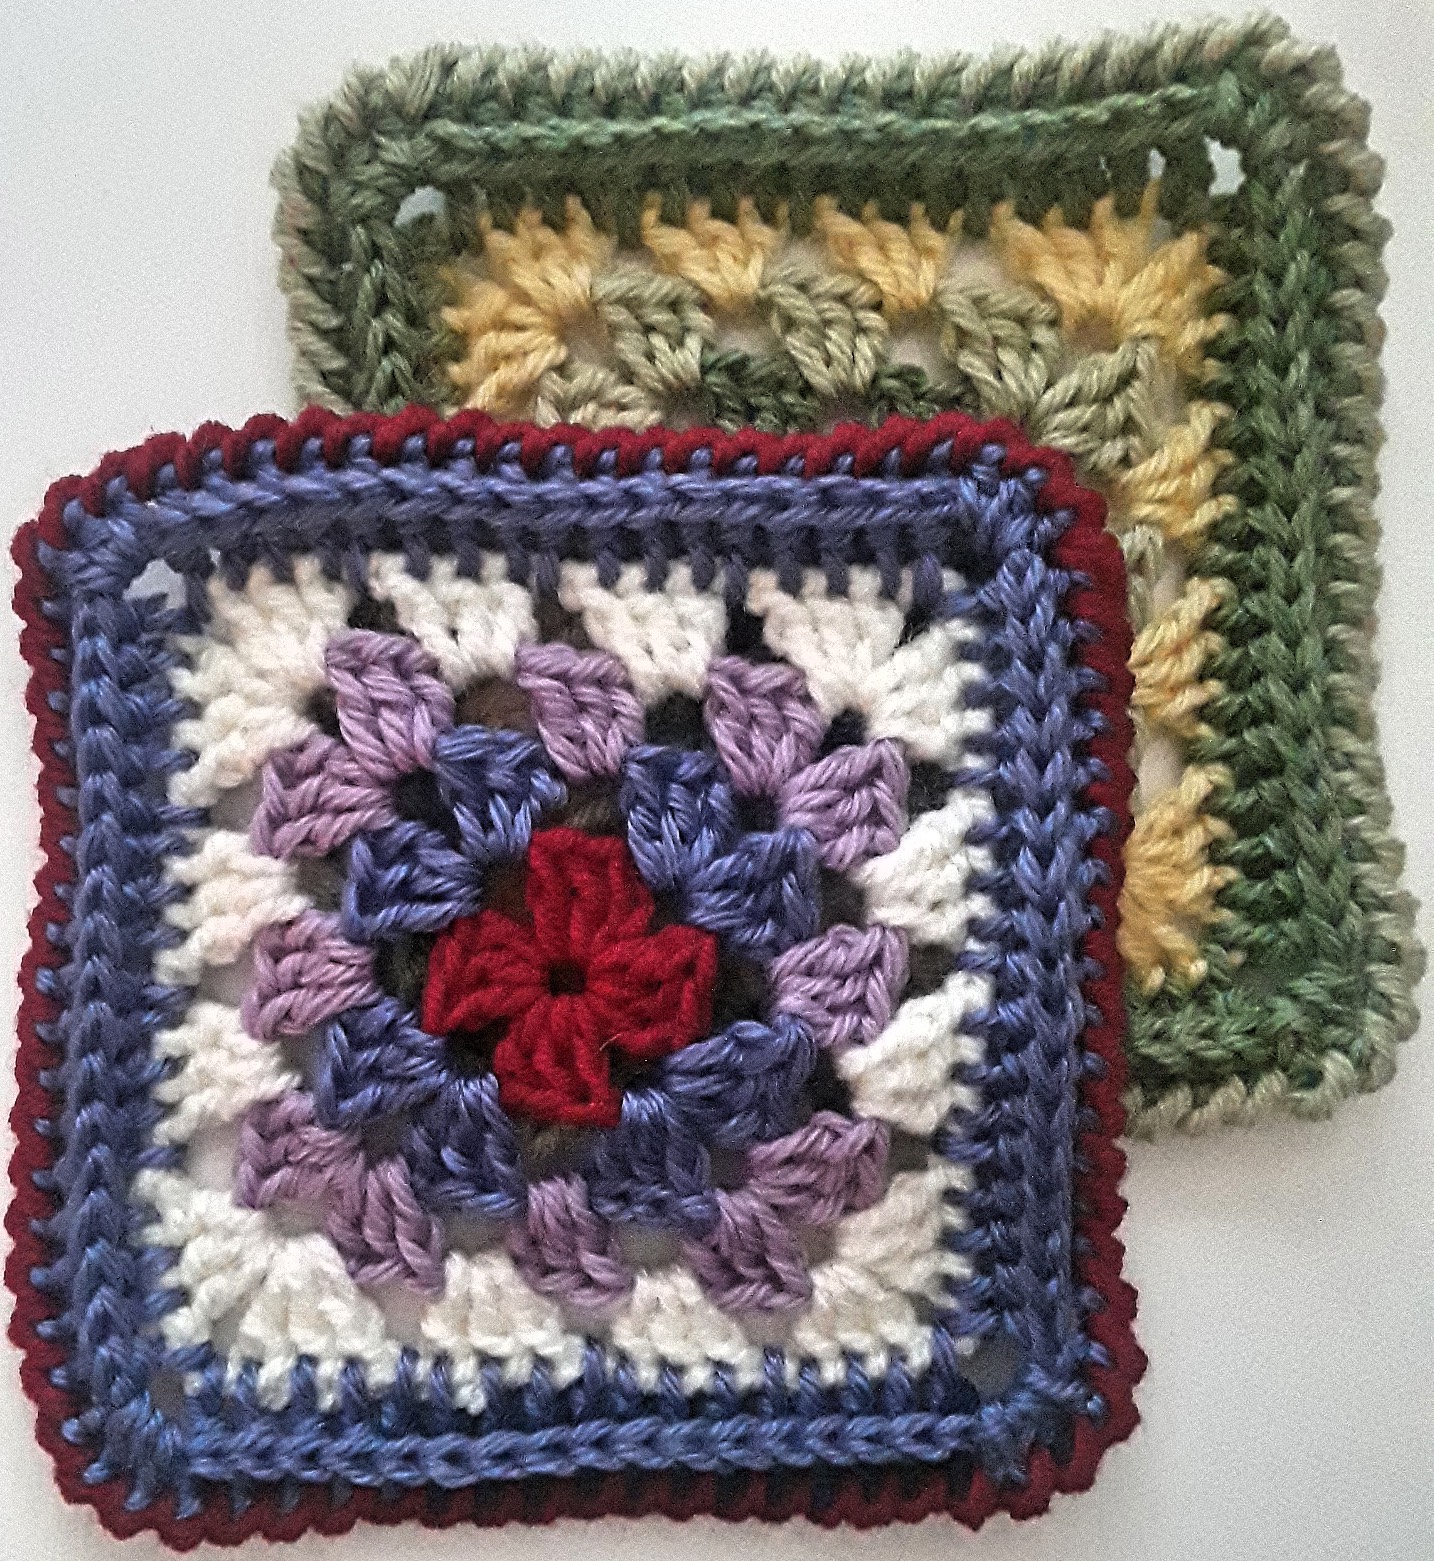 Granny squares crochet pattern